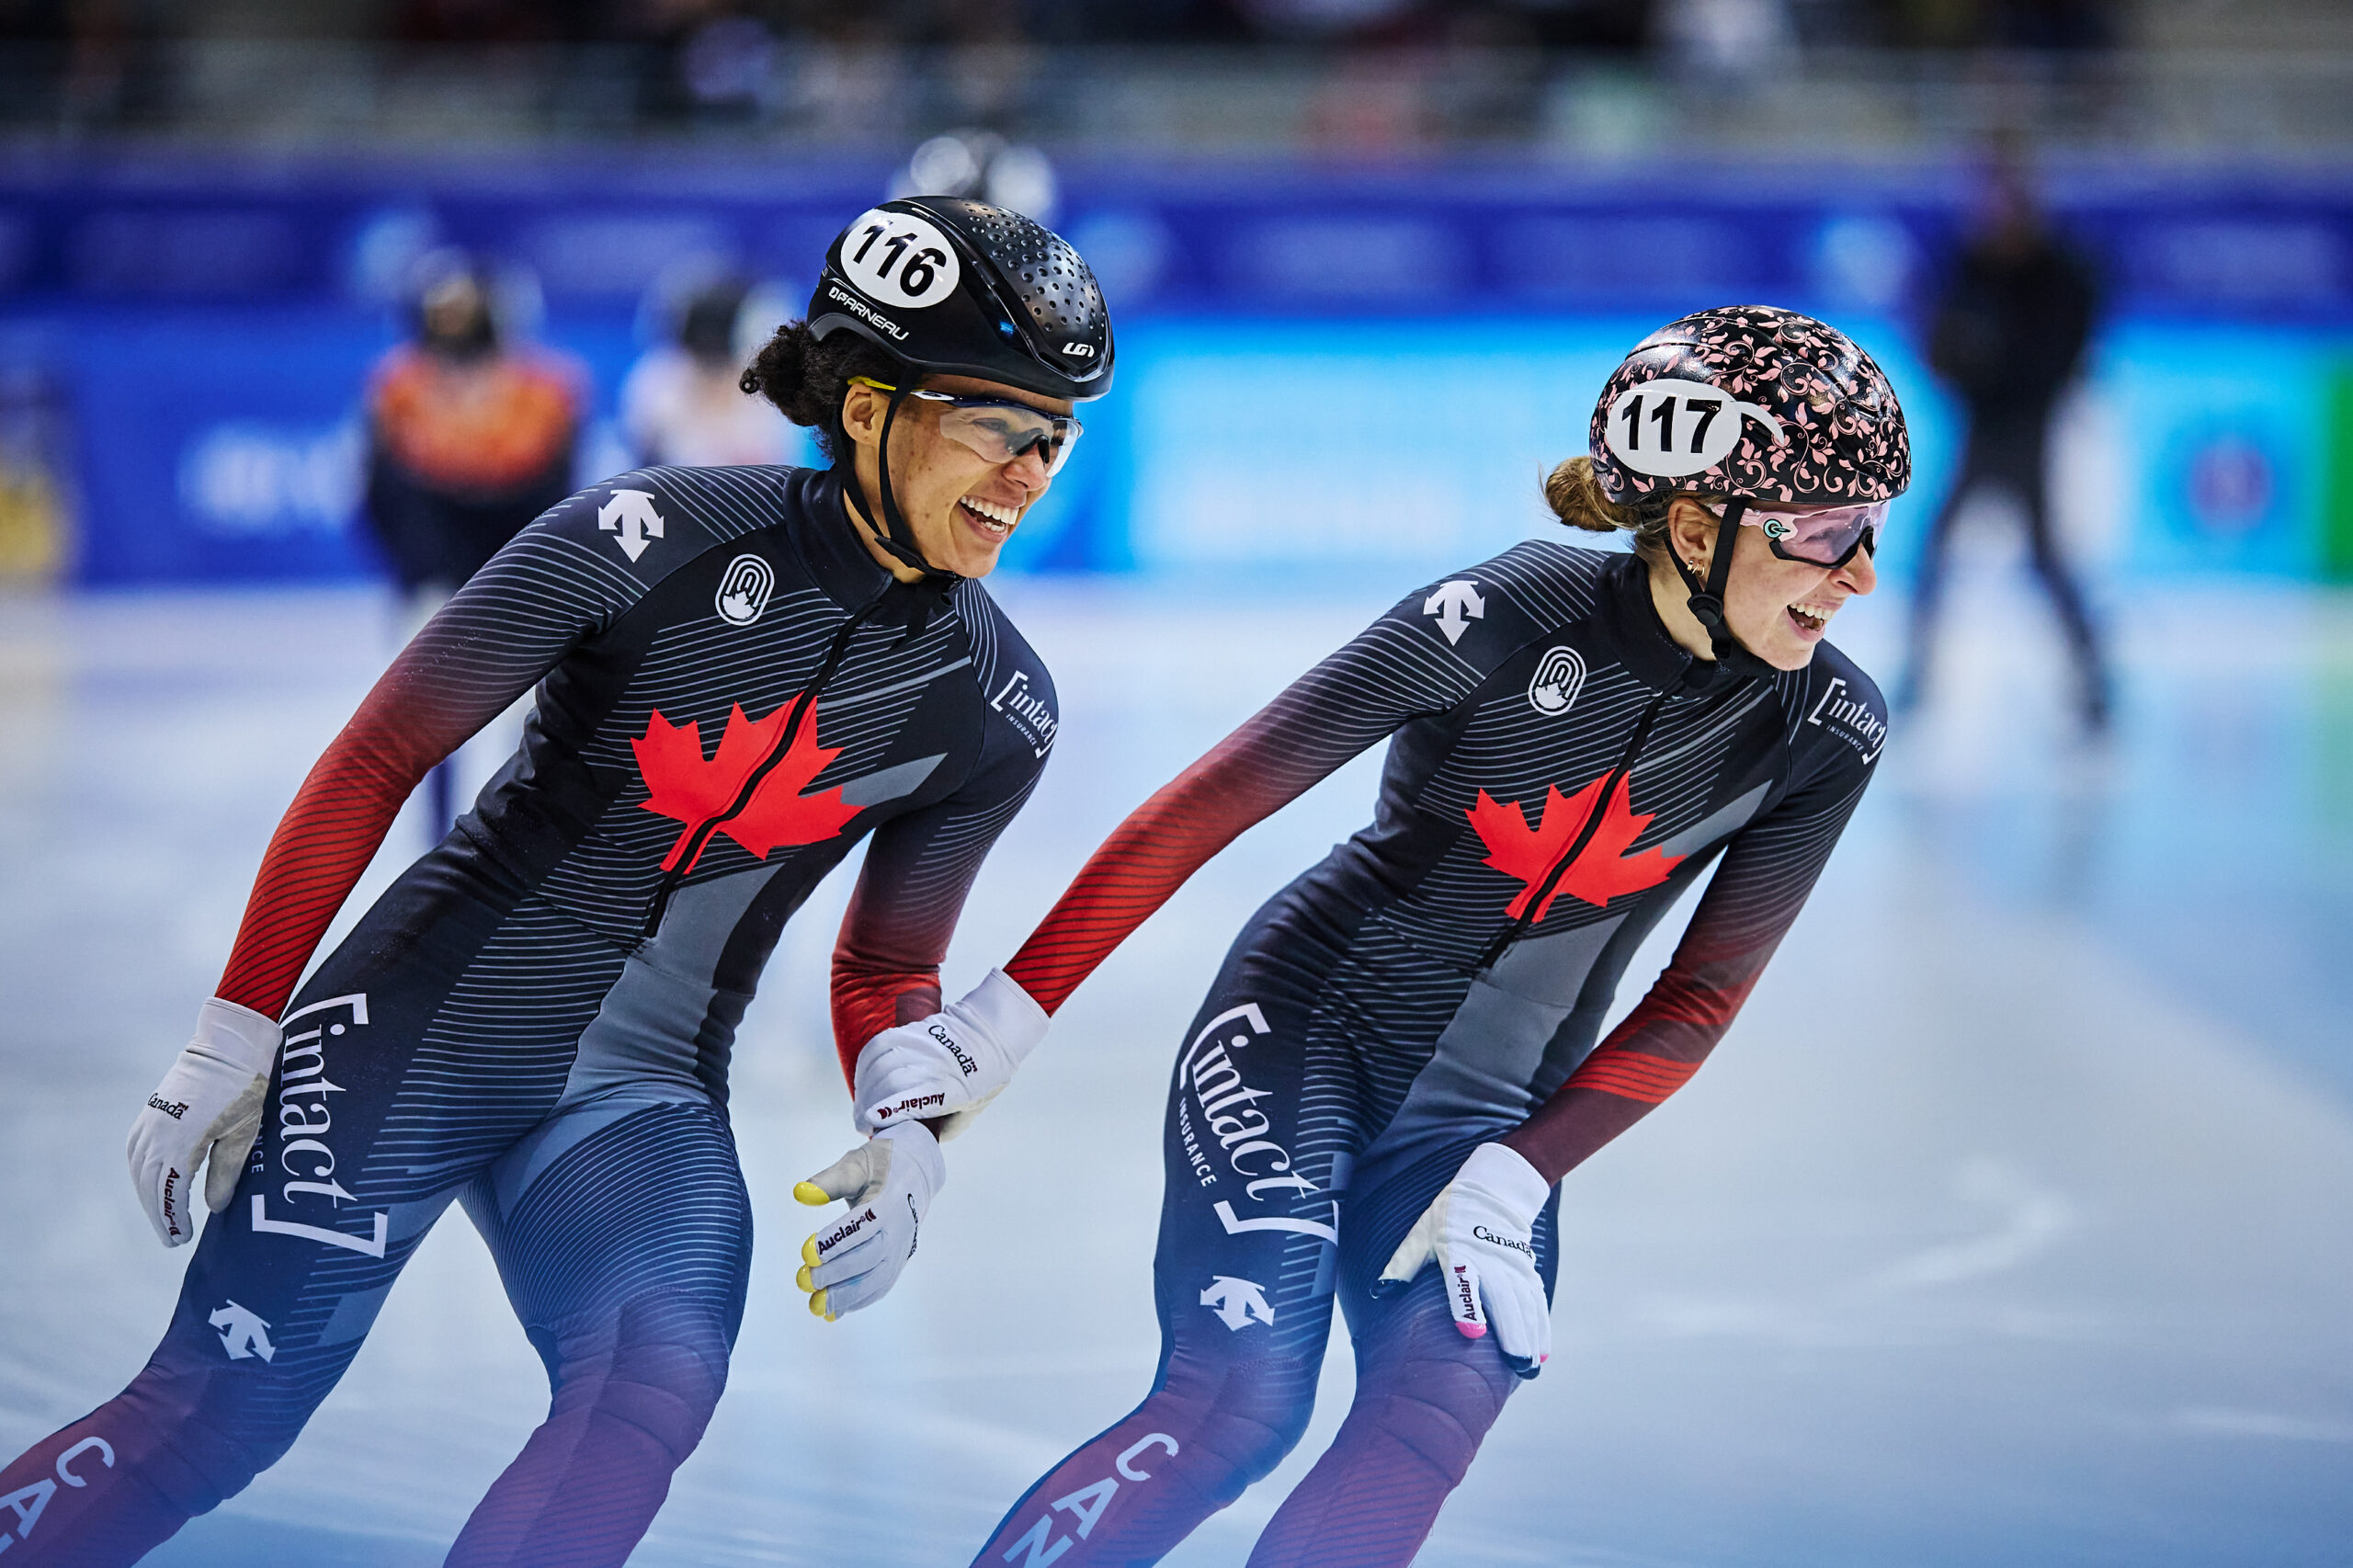 Speed Skating Canada confirms National and NextGen short track teams